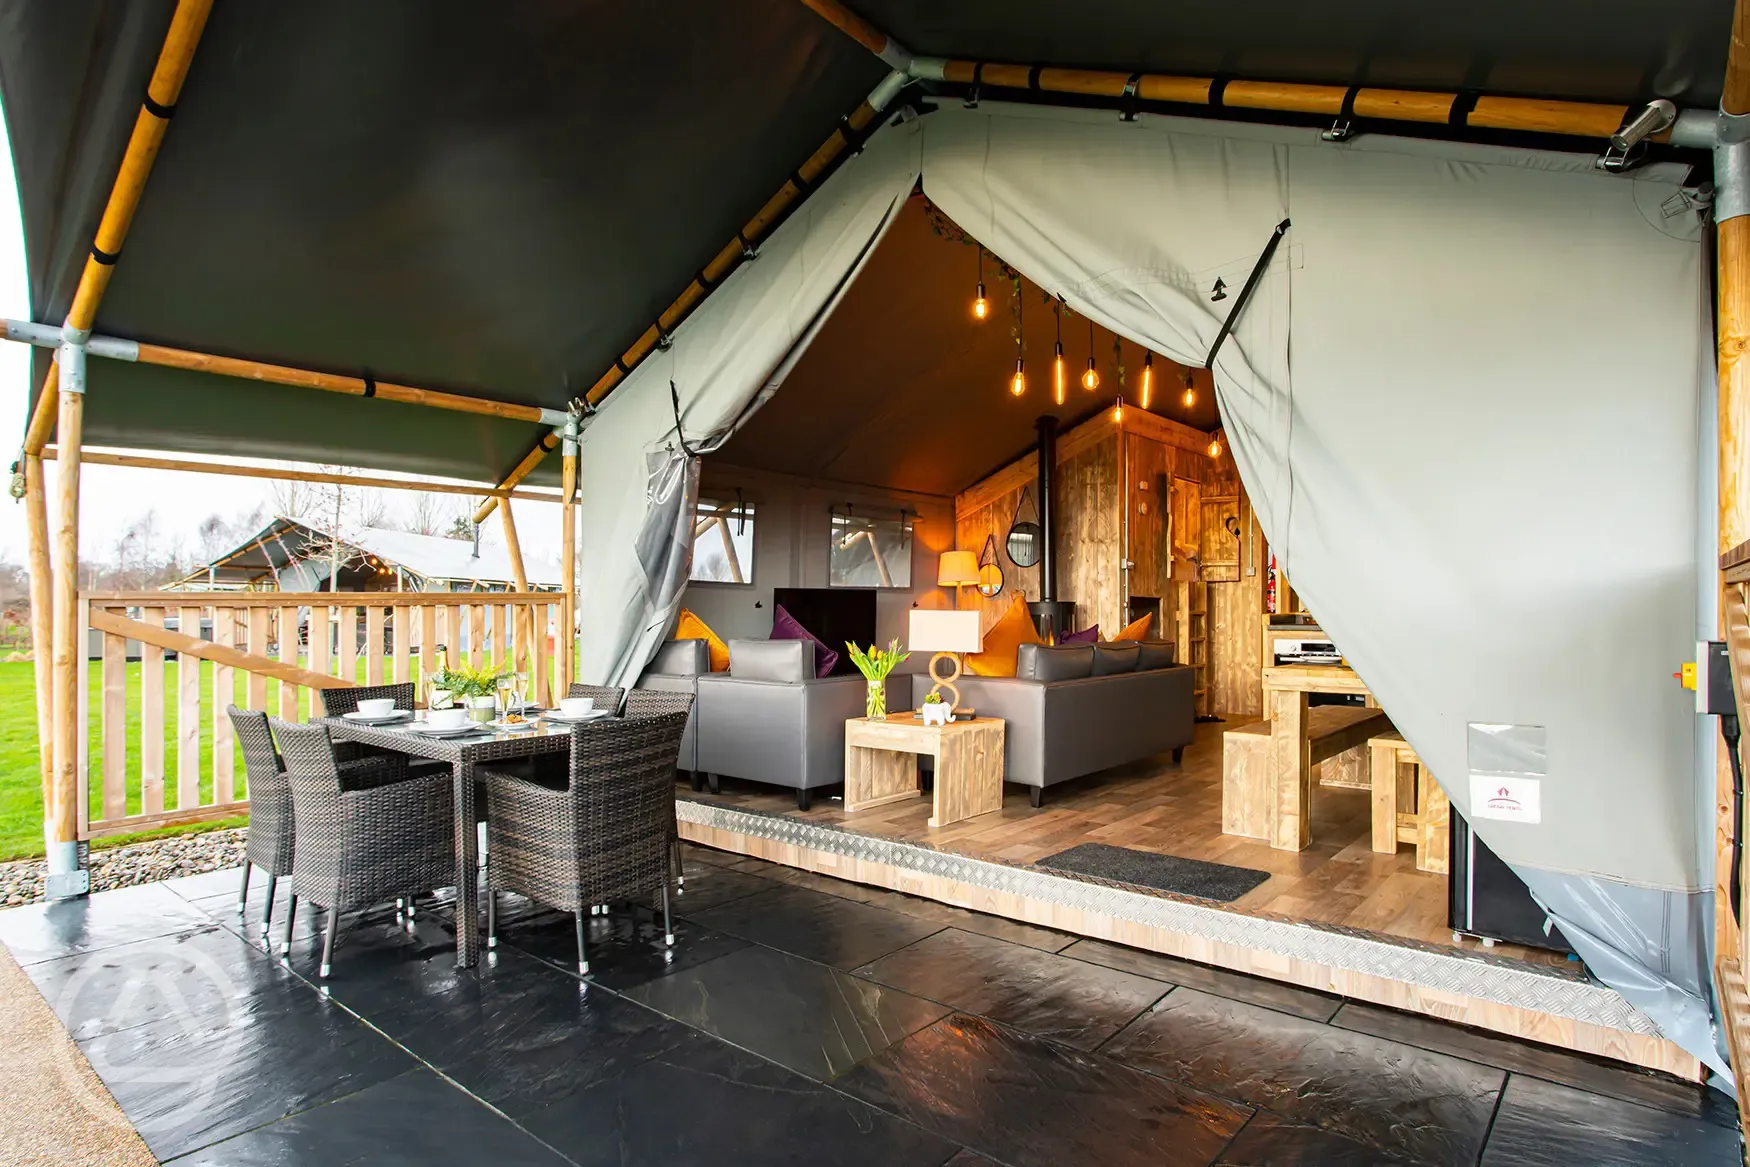 Safari tent decking and interior